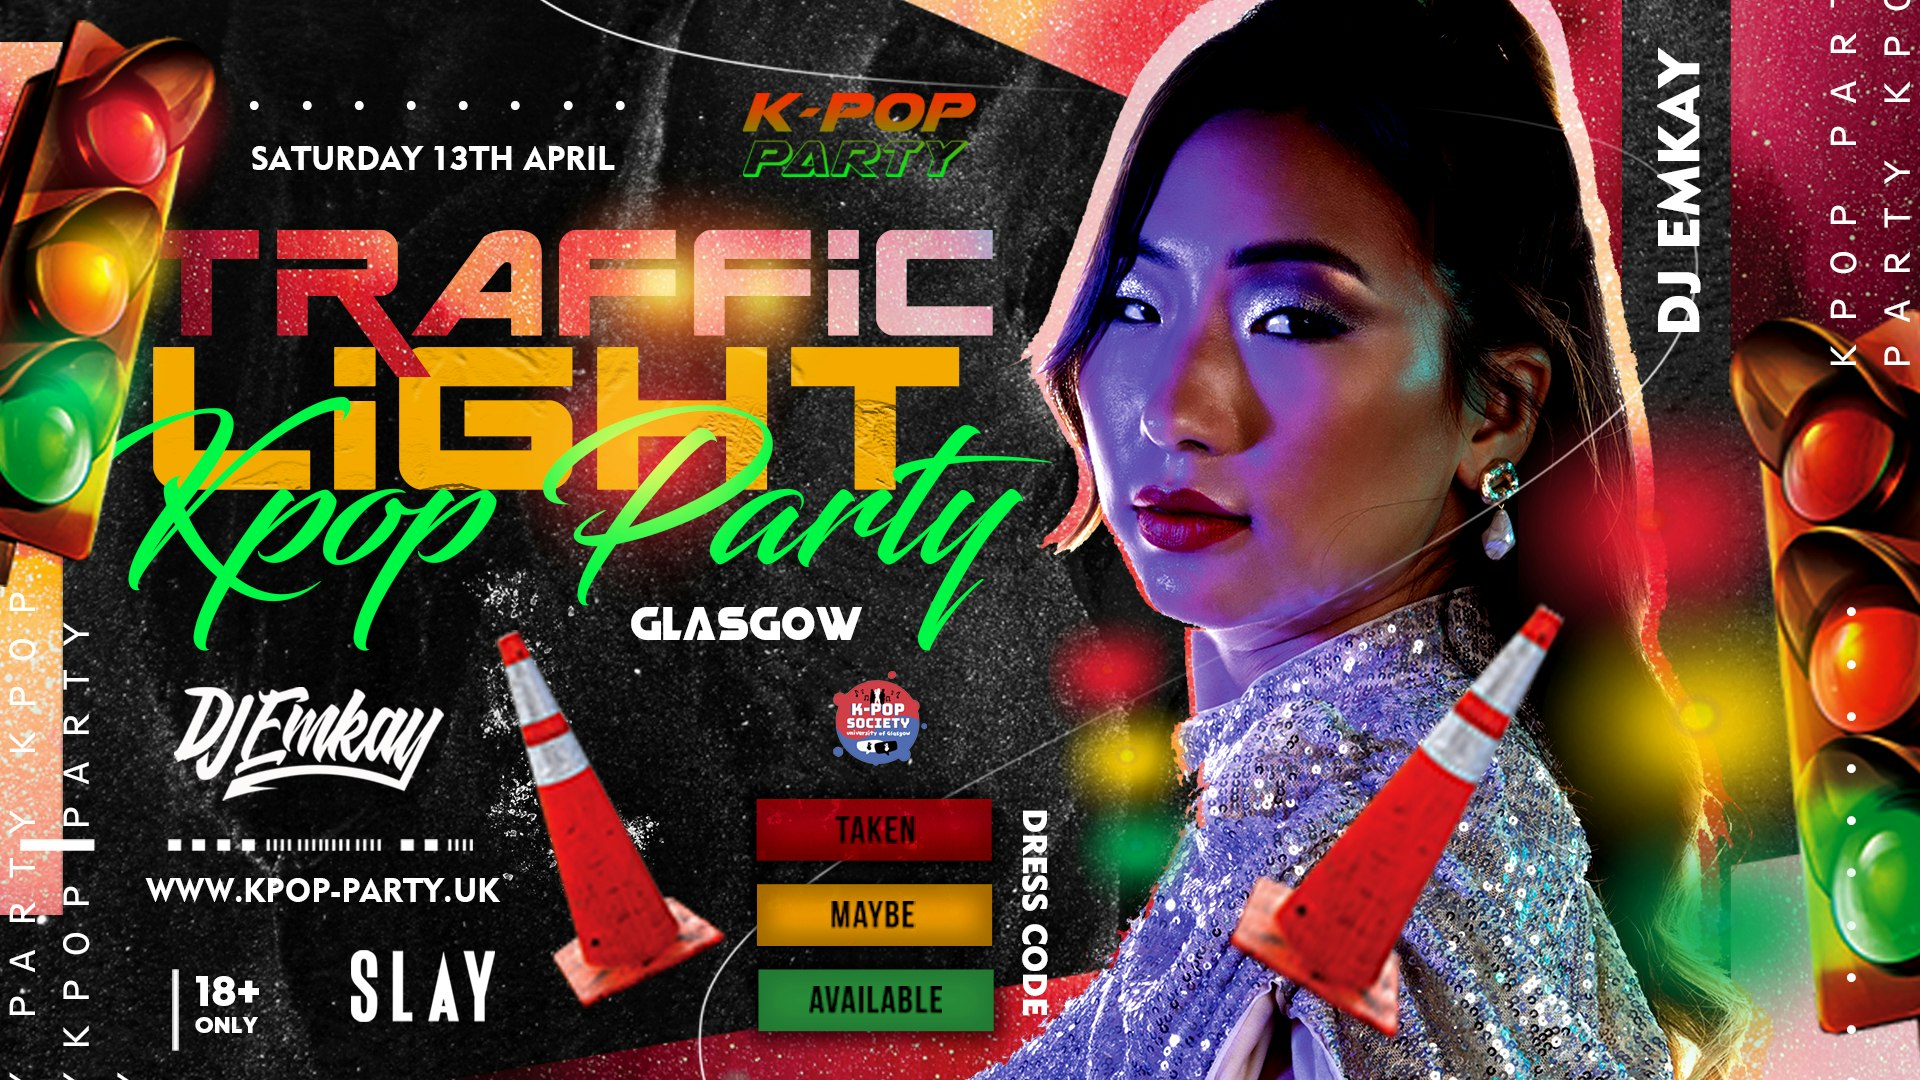 K-Pop TRAFFIC LIGHT Party Glasgow with DJ EMKAY | Saturday 13th April